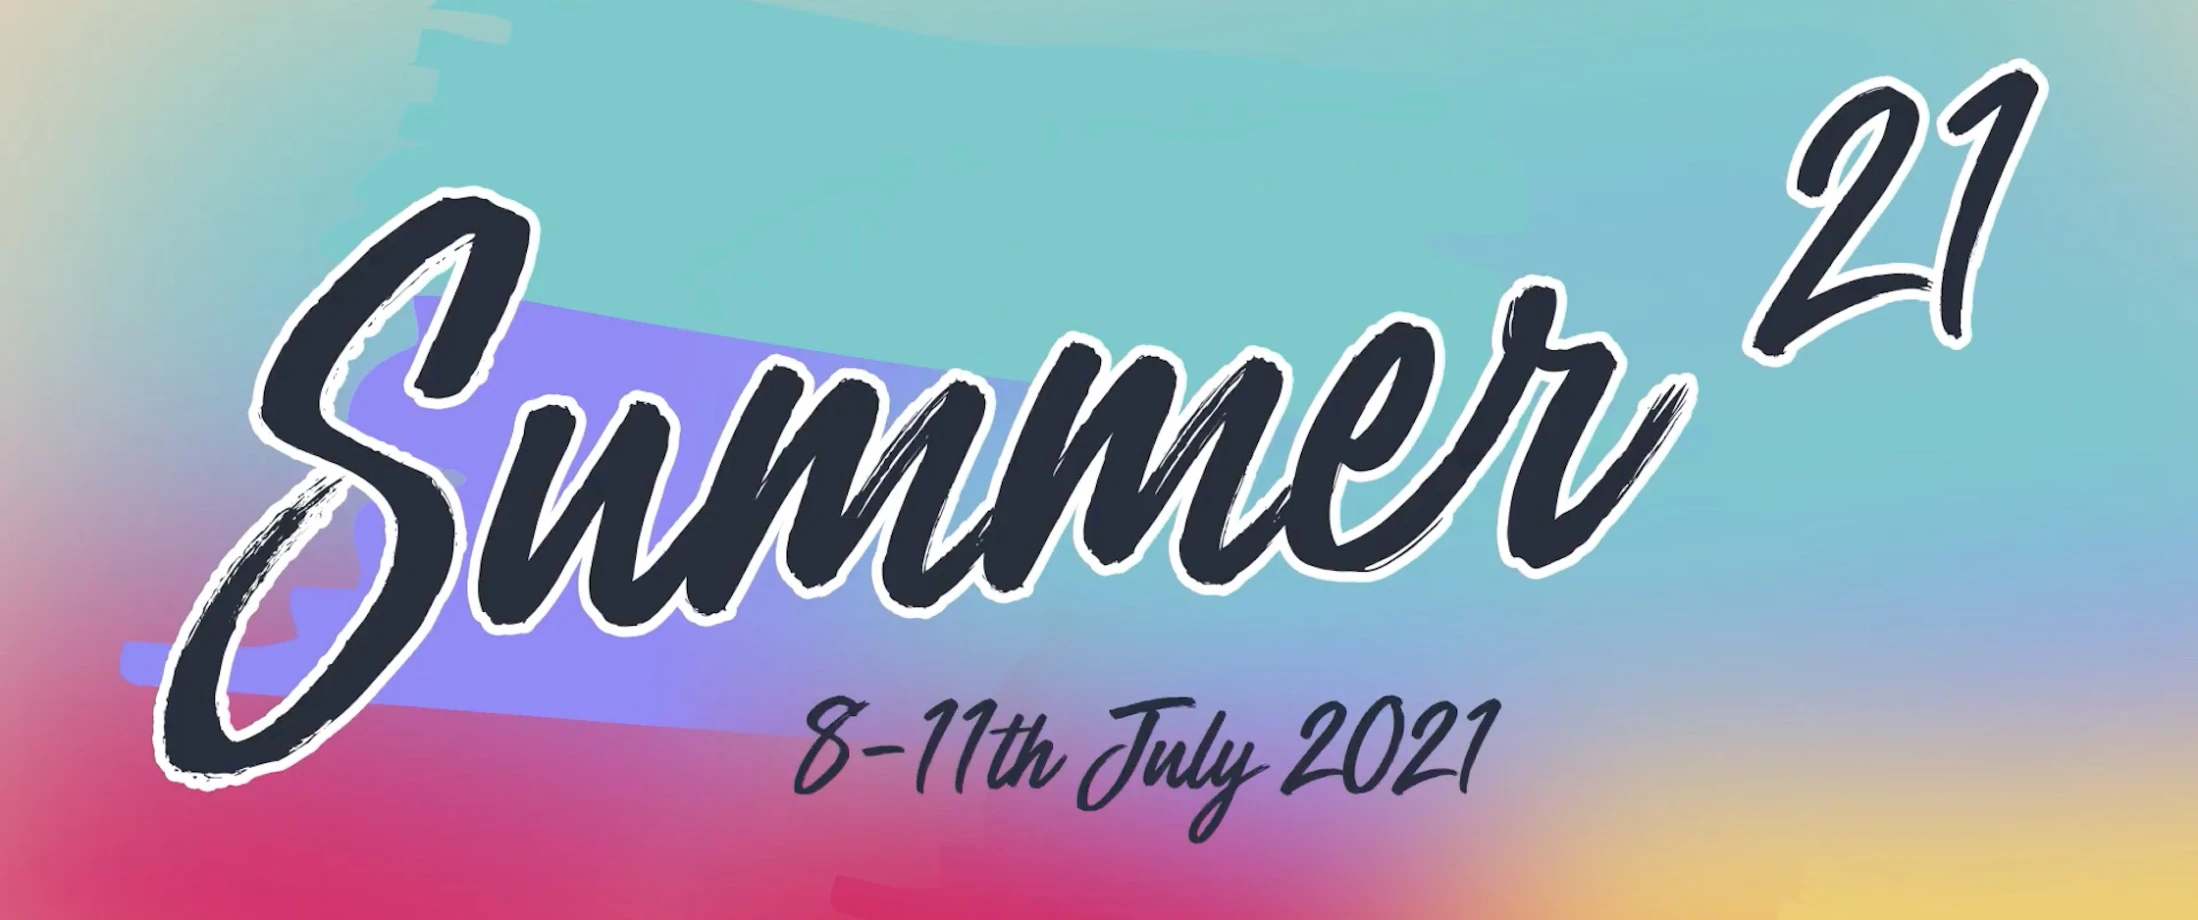 New Wine Ireland Summer21 Digital Conference